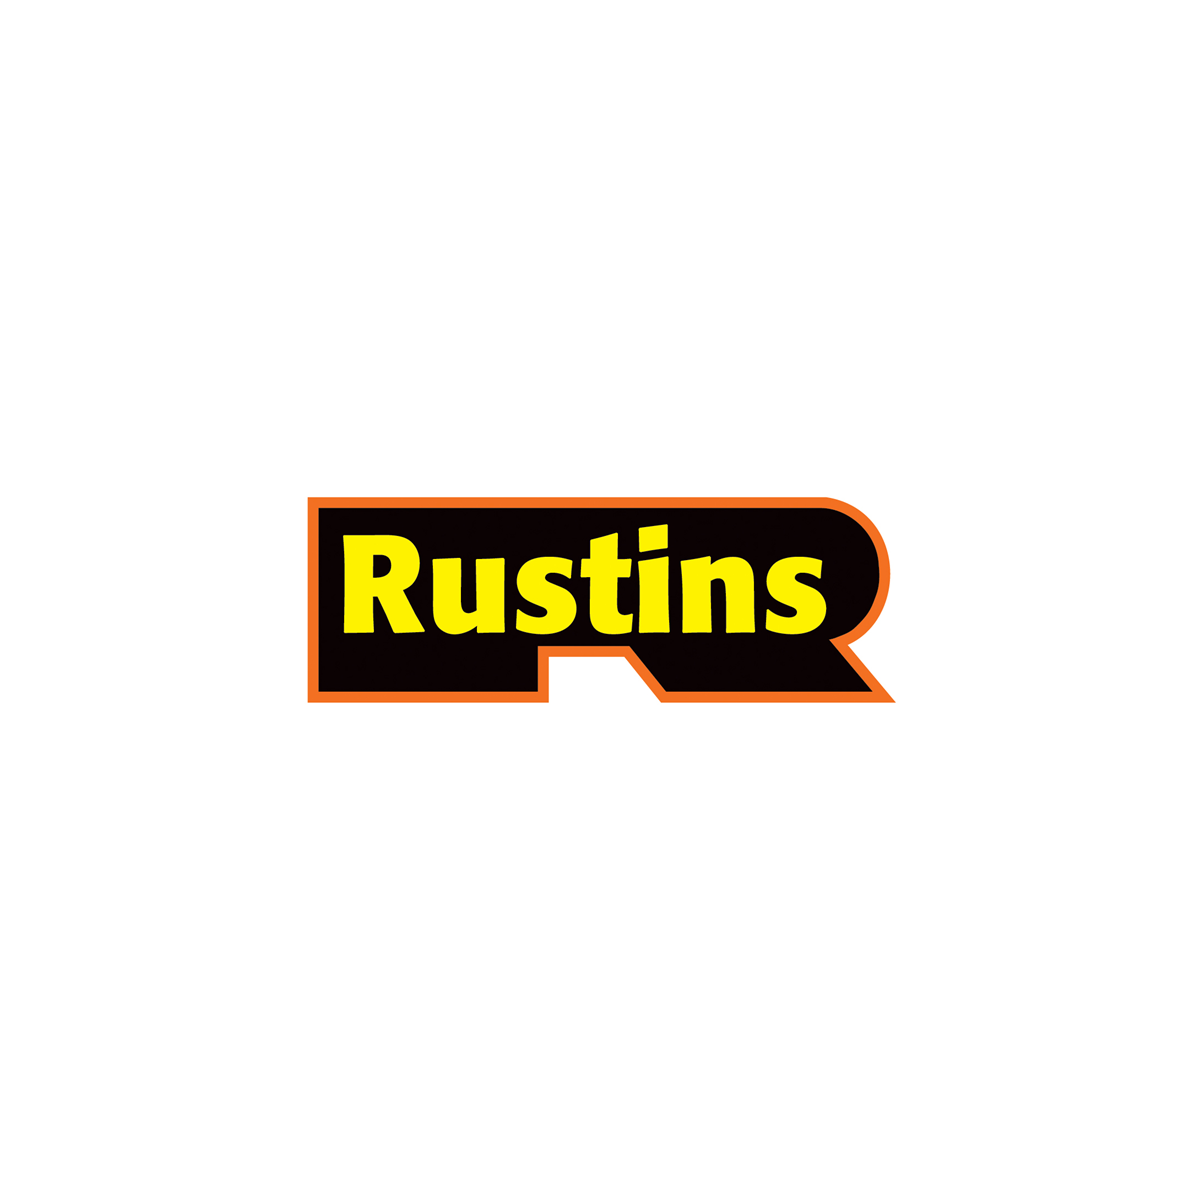 Where to buy Rustins varnish